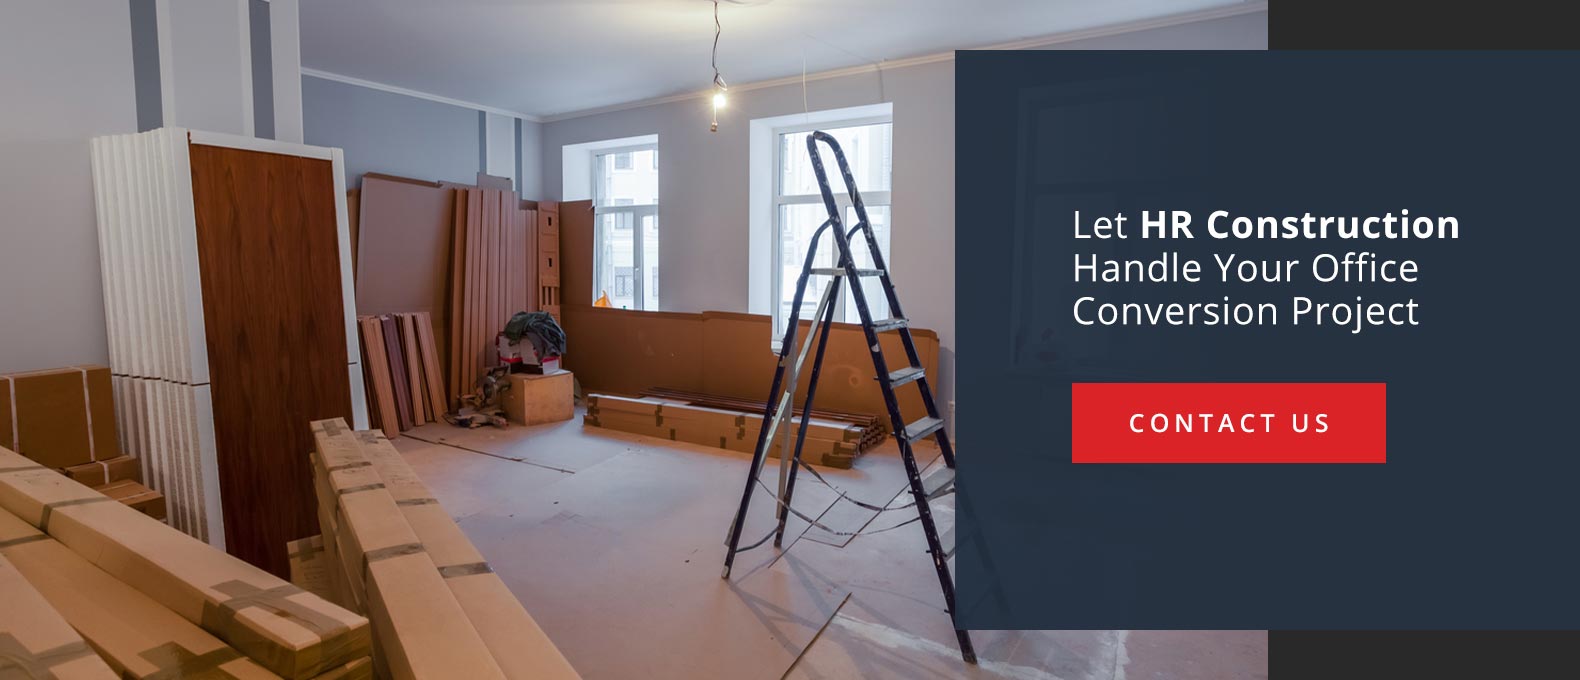 Let HR Construction Handle Your Office Conversion Project